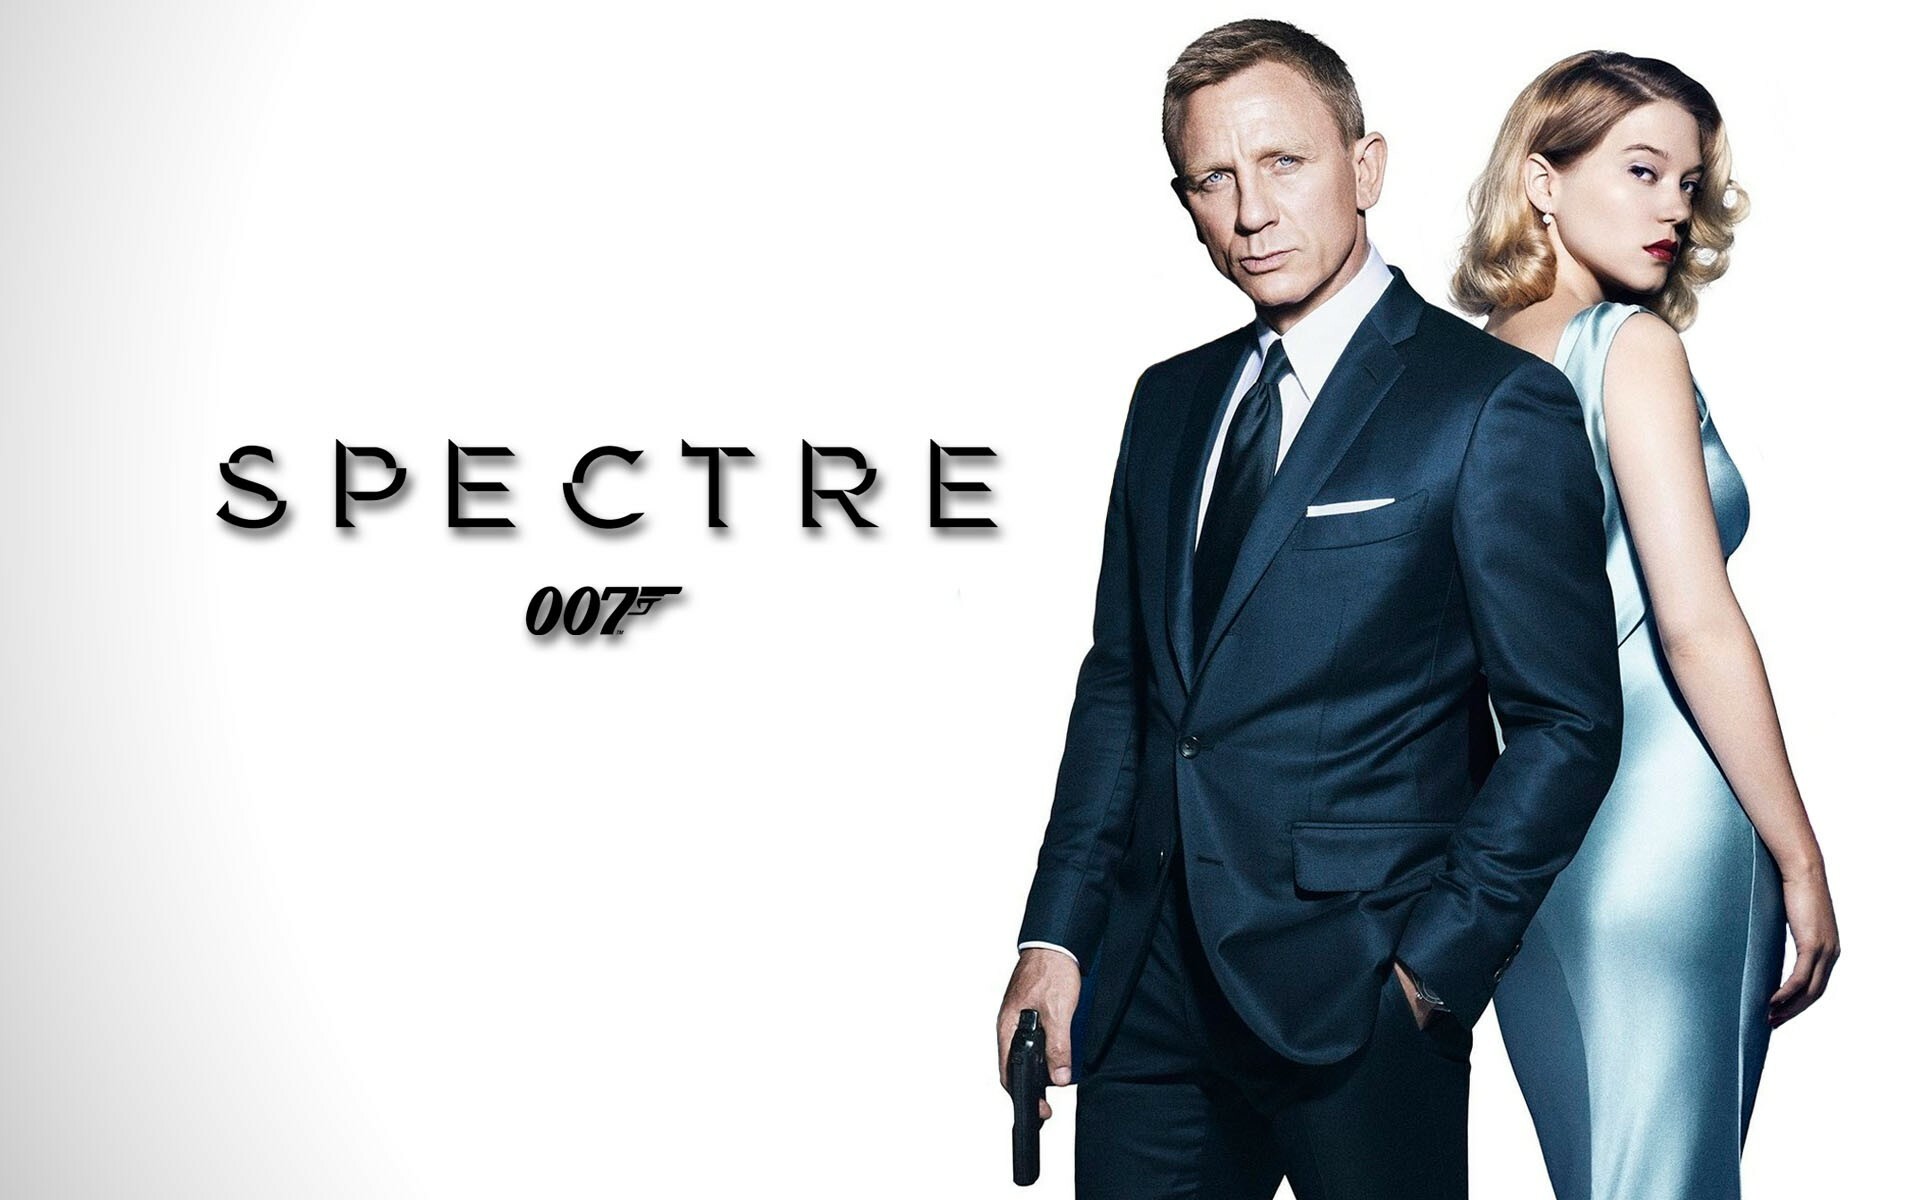 James Bond: Spectre, Madeleine Swann, agent 007, 2015 film. 1920x1200 HD Wallpaper.